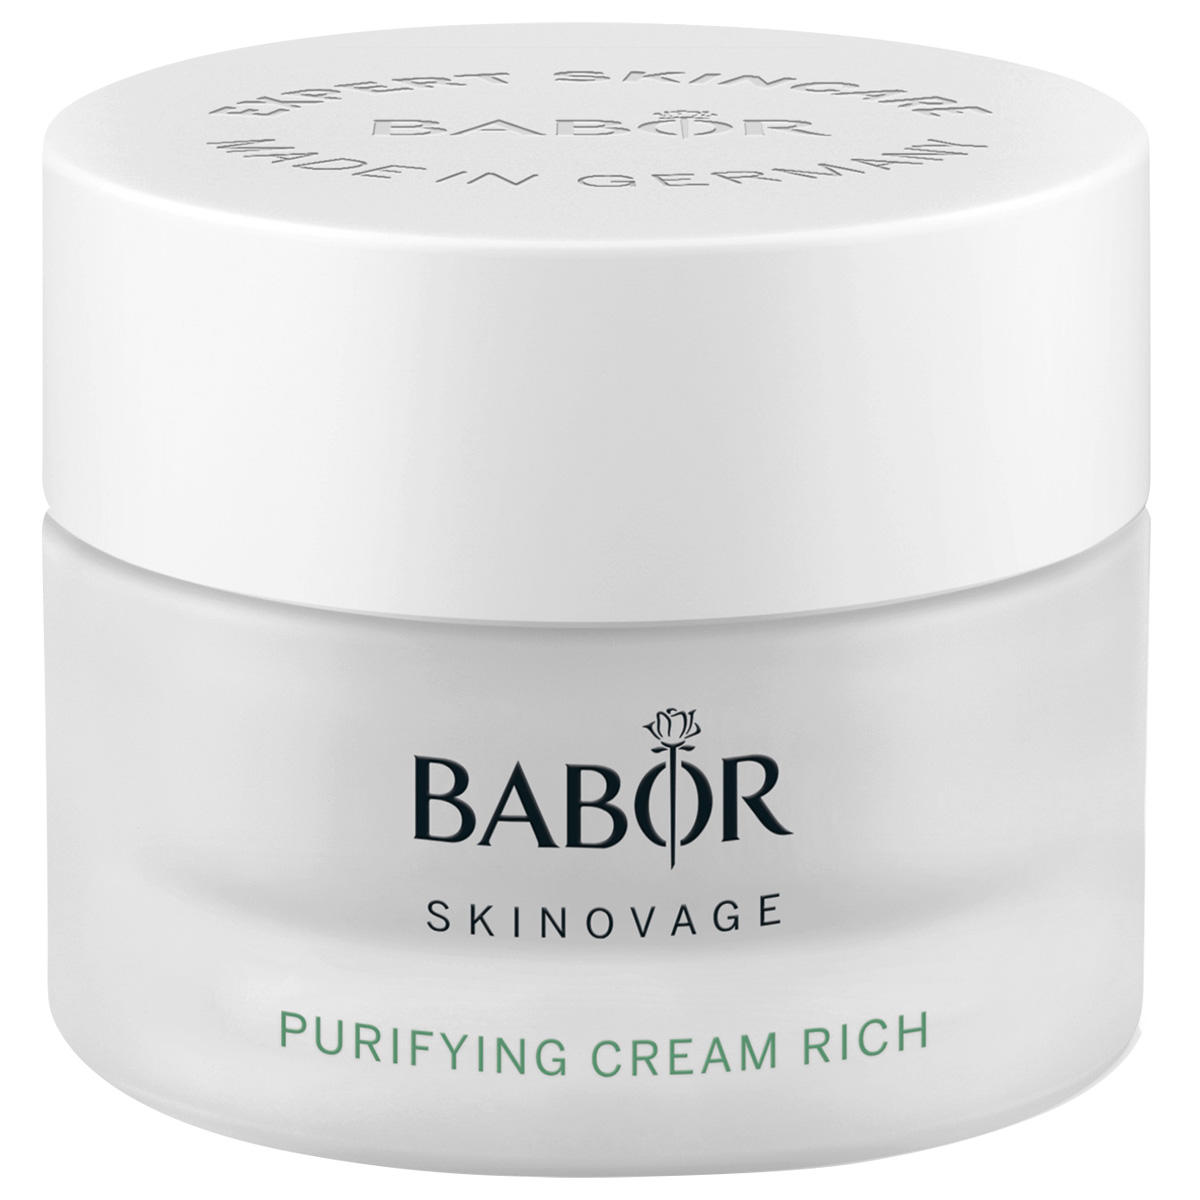 BABOR SKINOVAGE Purifying Cream rich 50 ml - 1